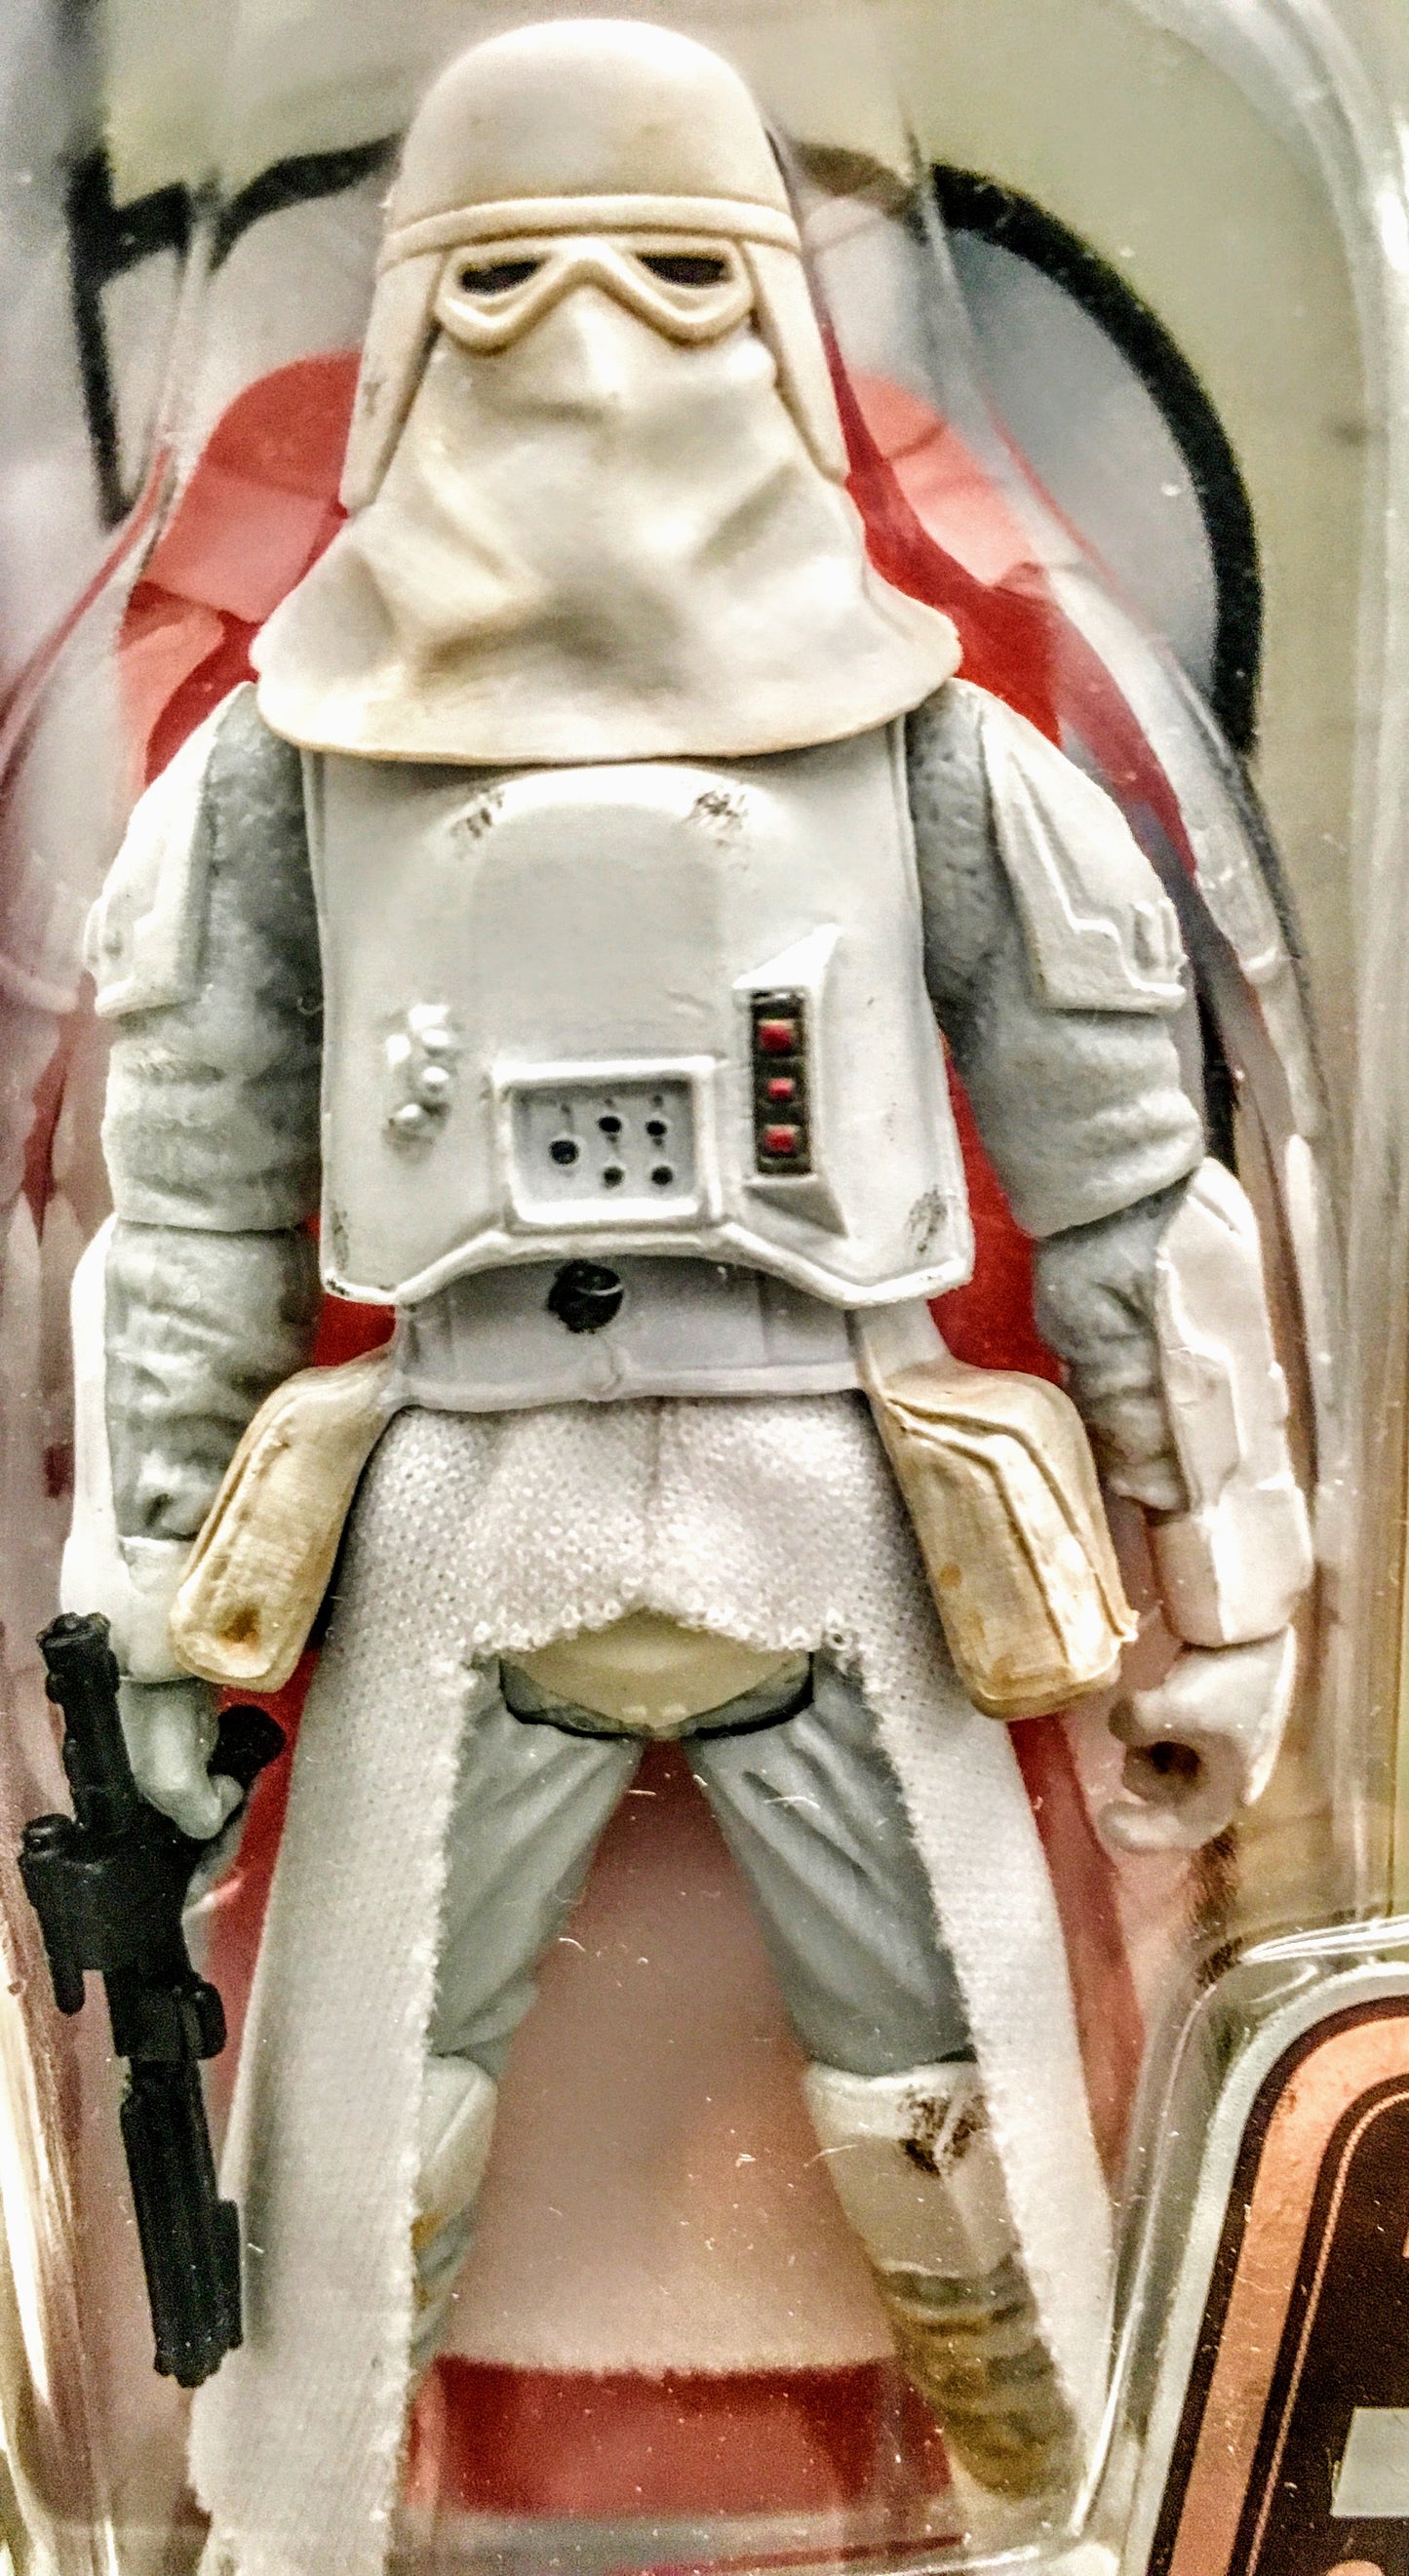 VSC Imperial Stormtrooper (Hoth Battle Gear)